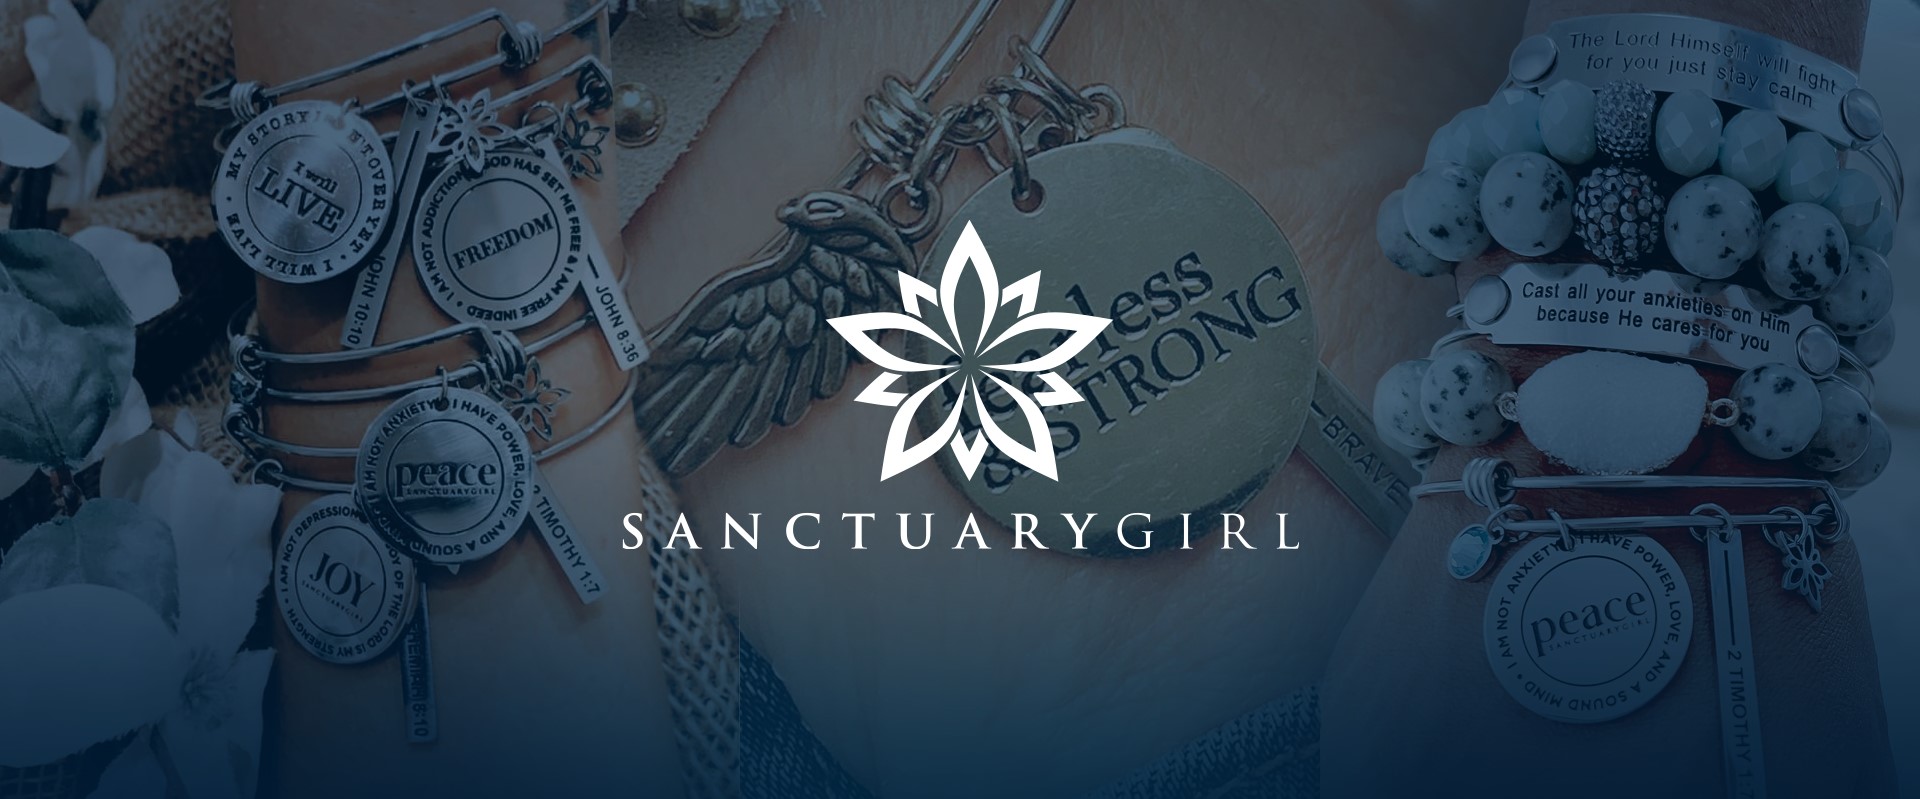 Sanctuary Girl Jewelry